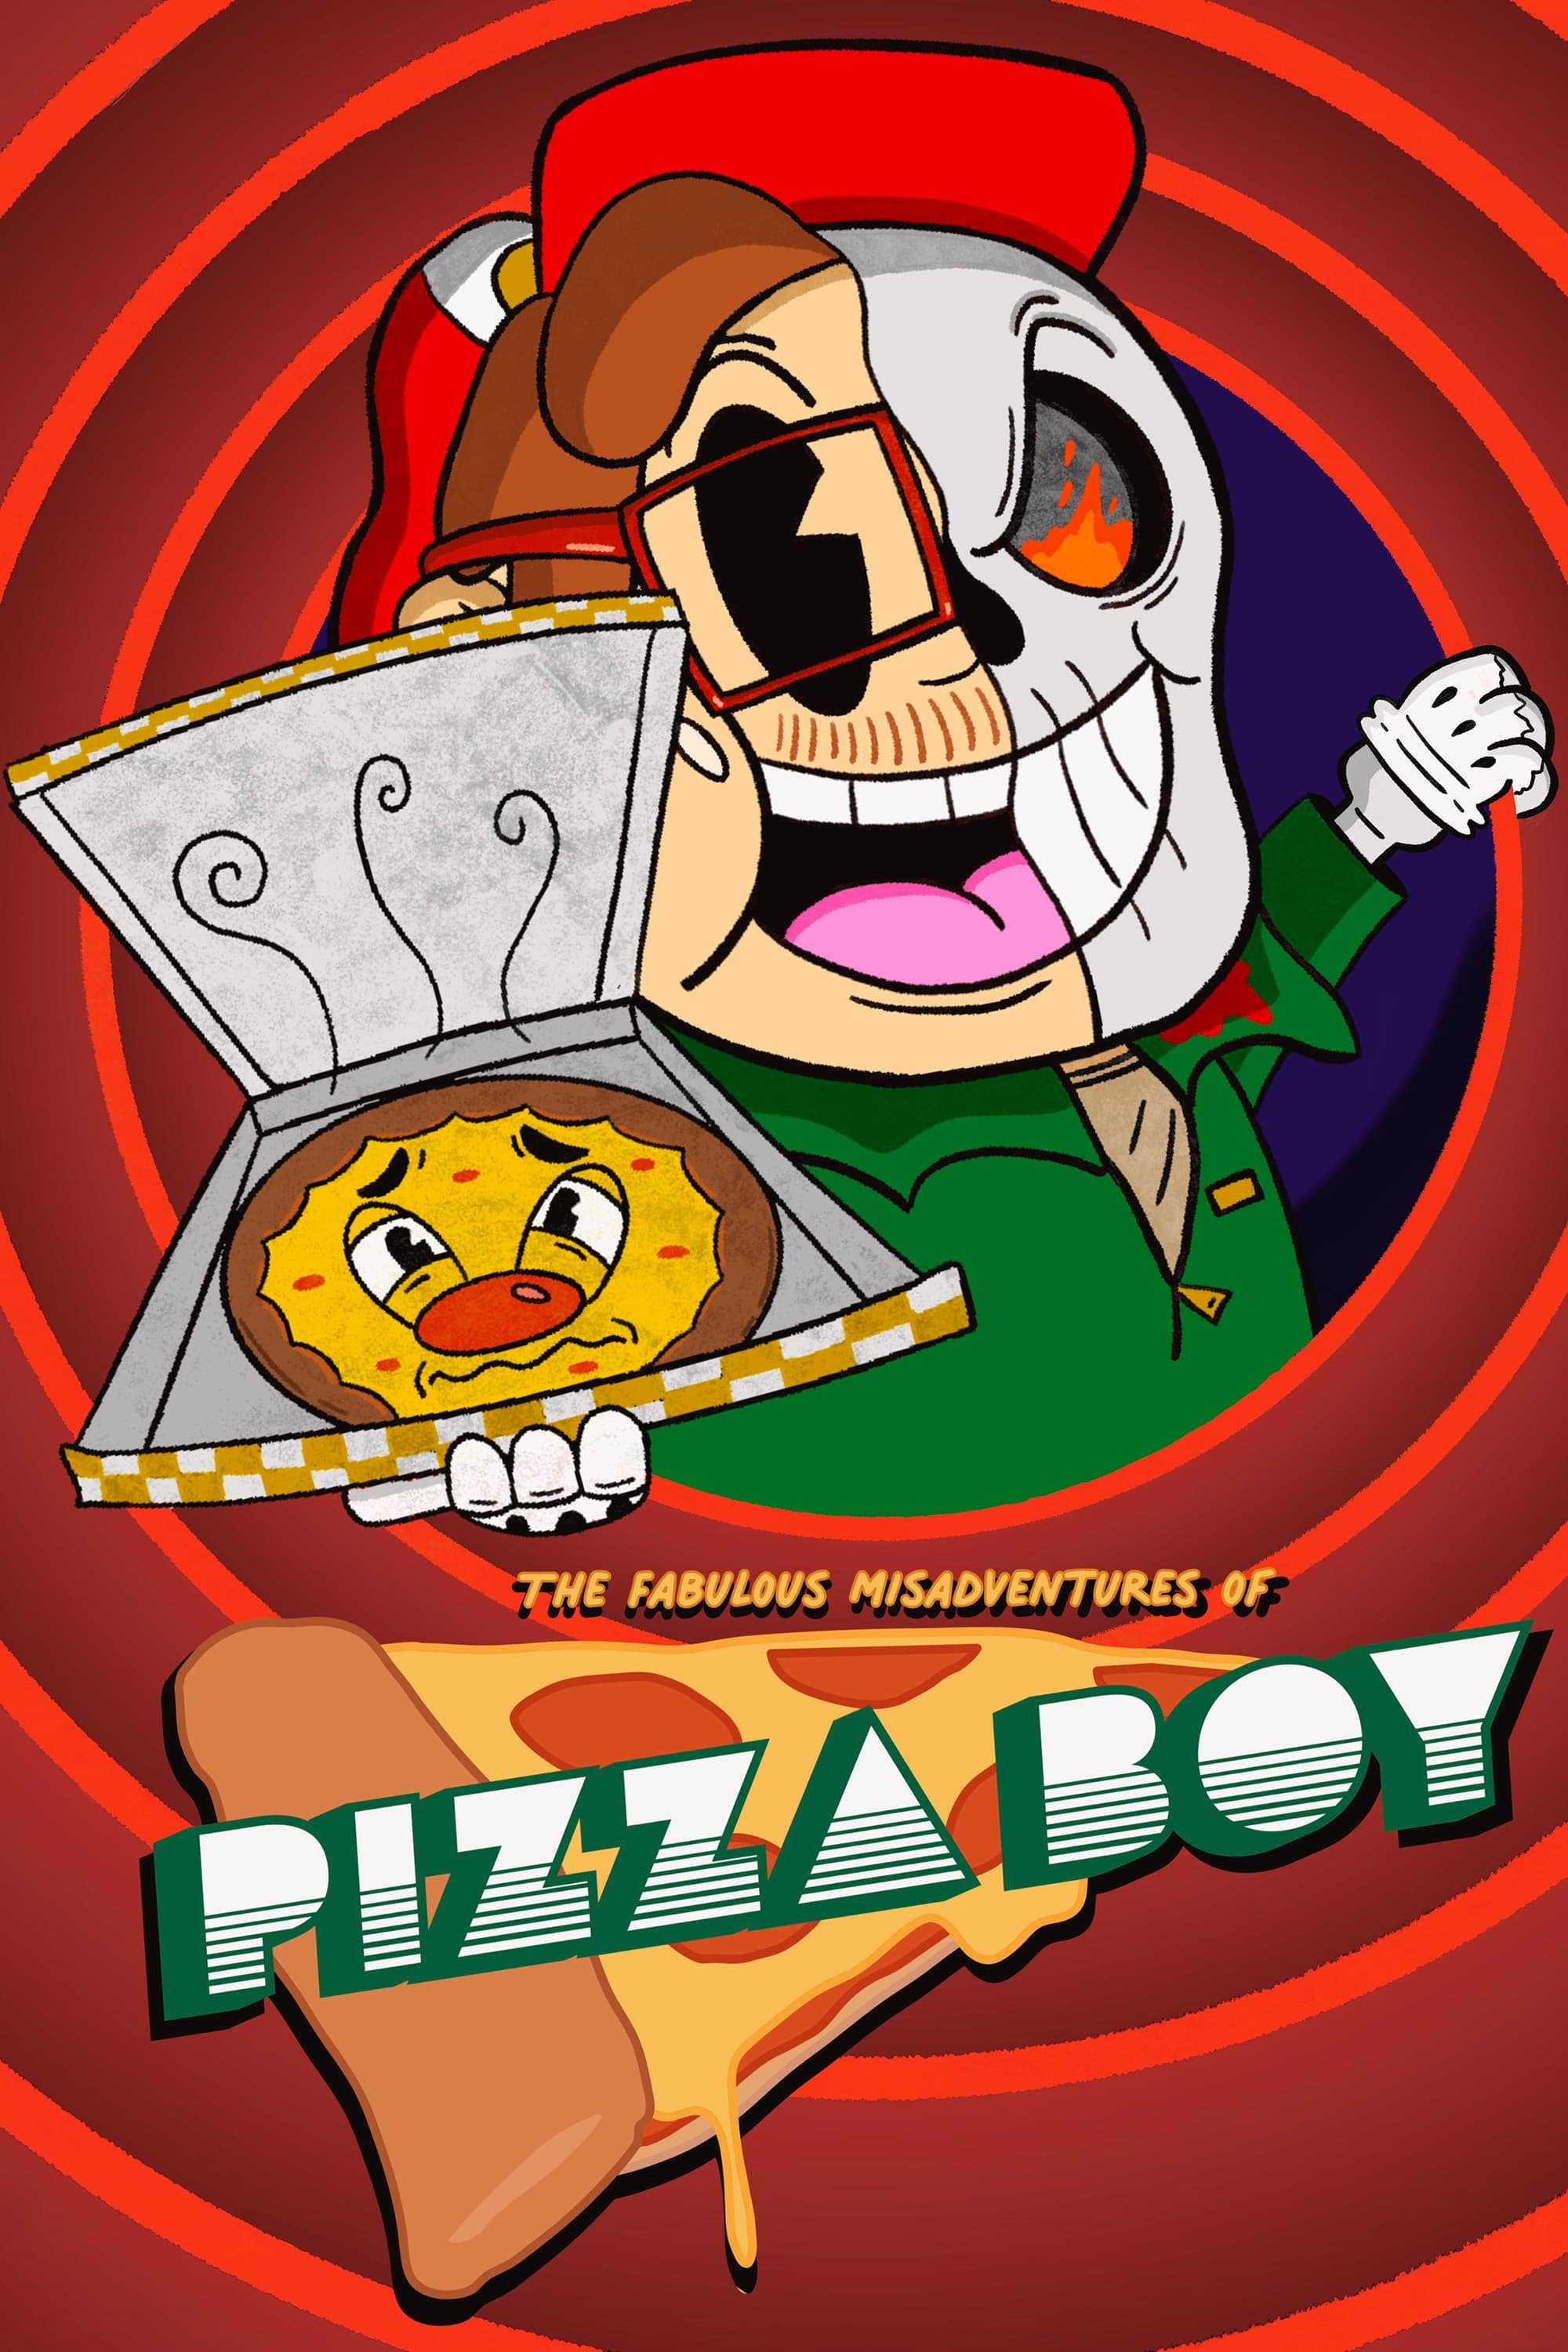 The Fabulous Misadventures of Pizza Boy